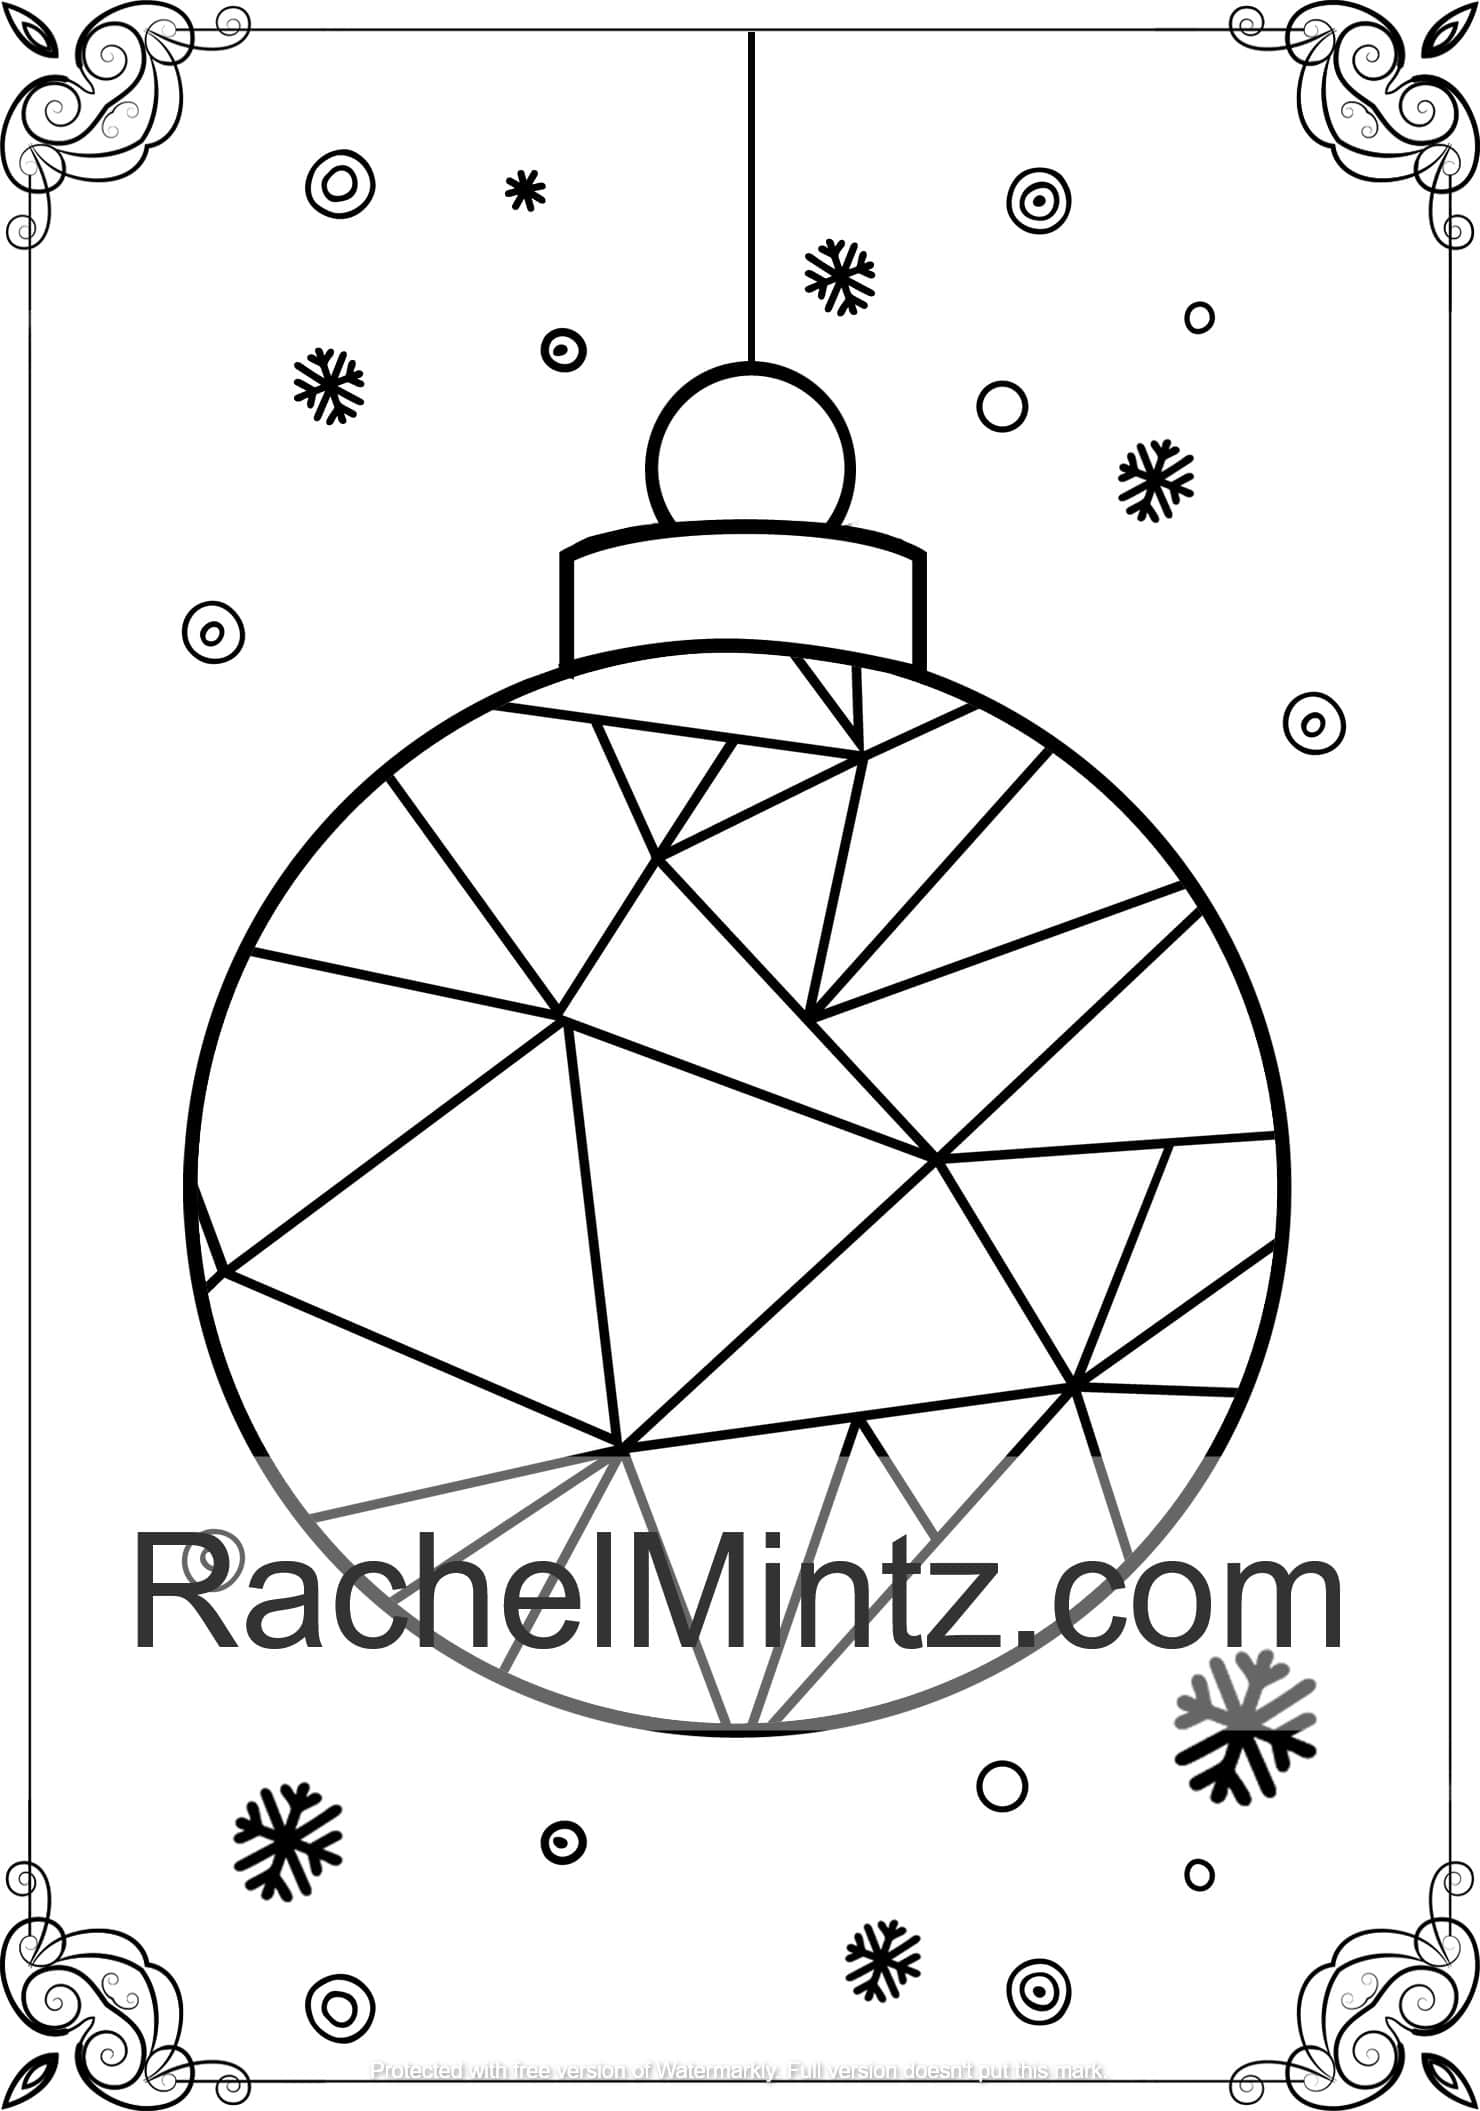 White Christmas Tree Red Balls: Over 56,470 Royalty-Free Licensable Stock  Vectors & Vector Art | Shutterstock